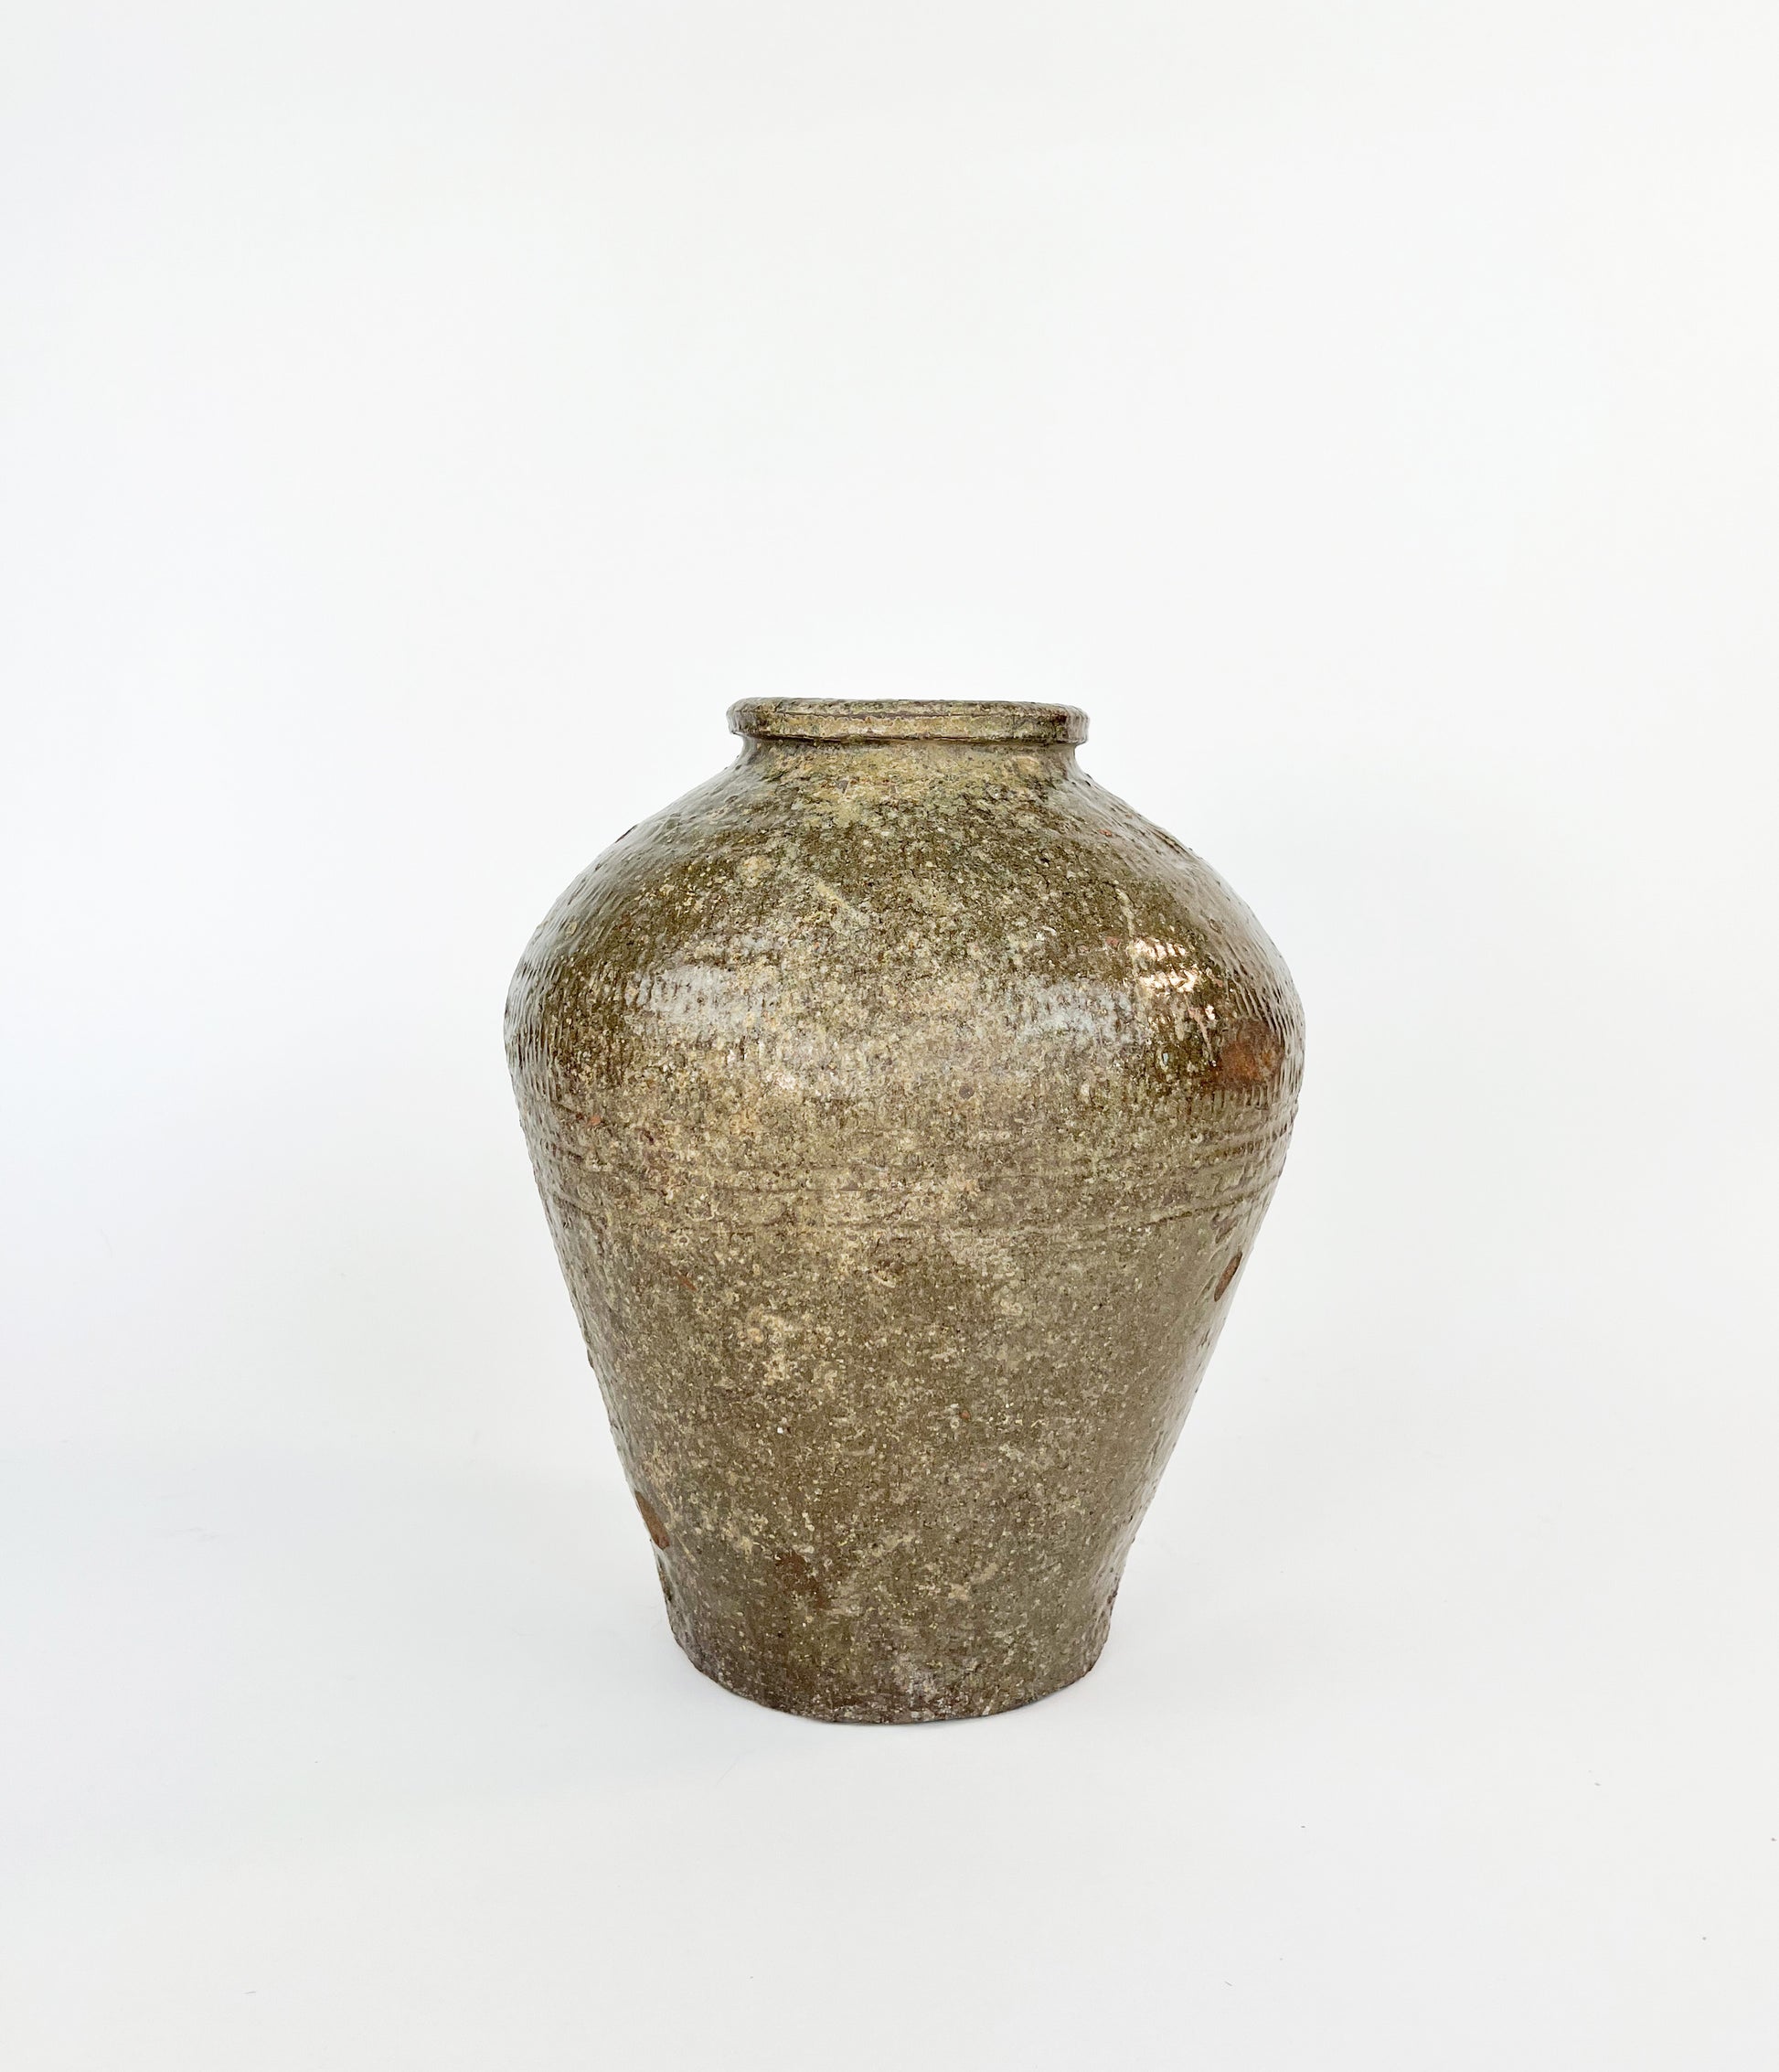 Mijiu Jar, Chinese Pottery Ceramics, Vintage Pottery, Rice Wine Jar, Vintage Jar, Vintage Vase with white background.